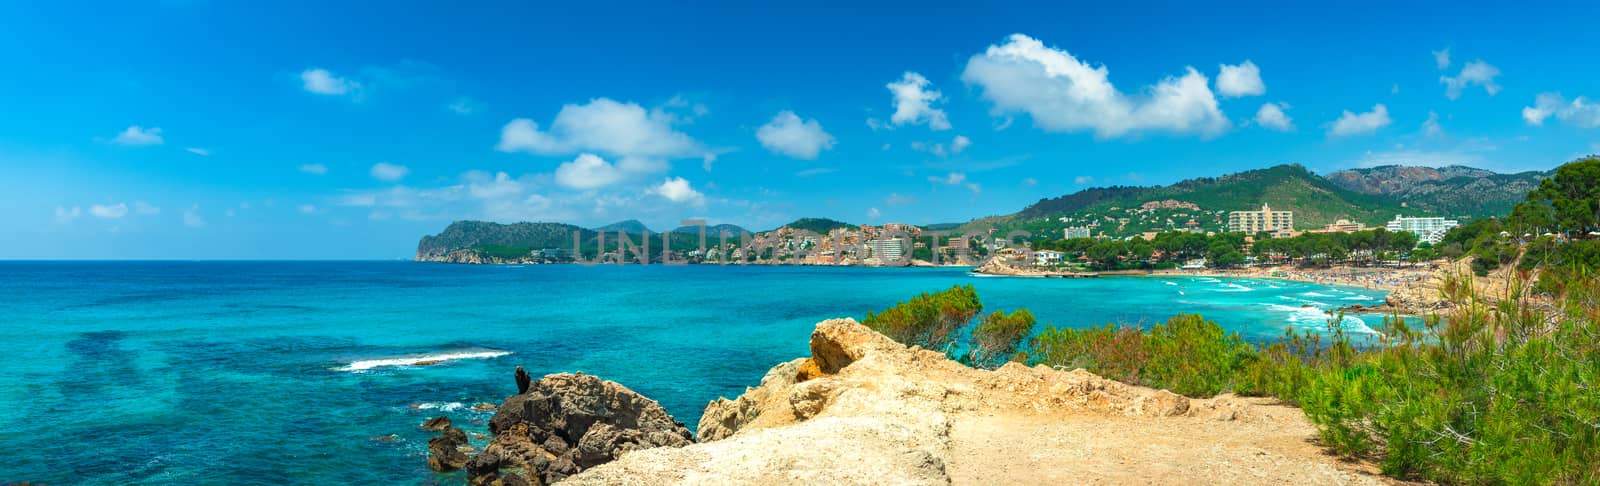 Seaside panorama view of beach at Paguera and Calvia coast, Majorca Balearic Islands, Spain Mediterranean Sea by Vulcano